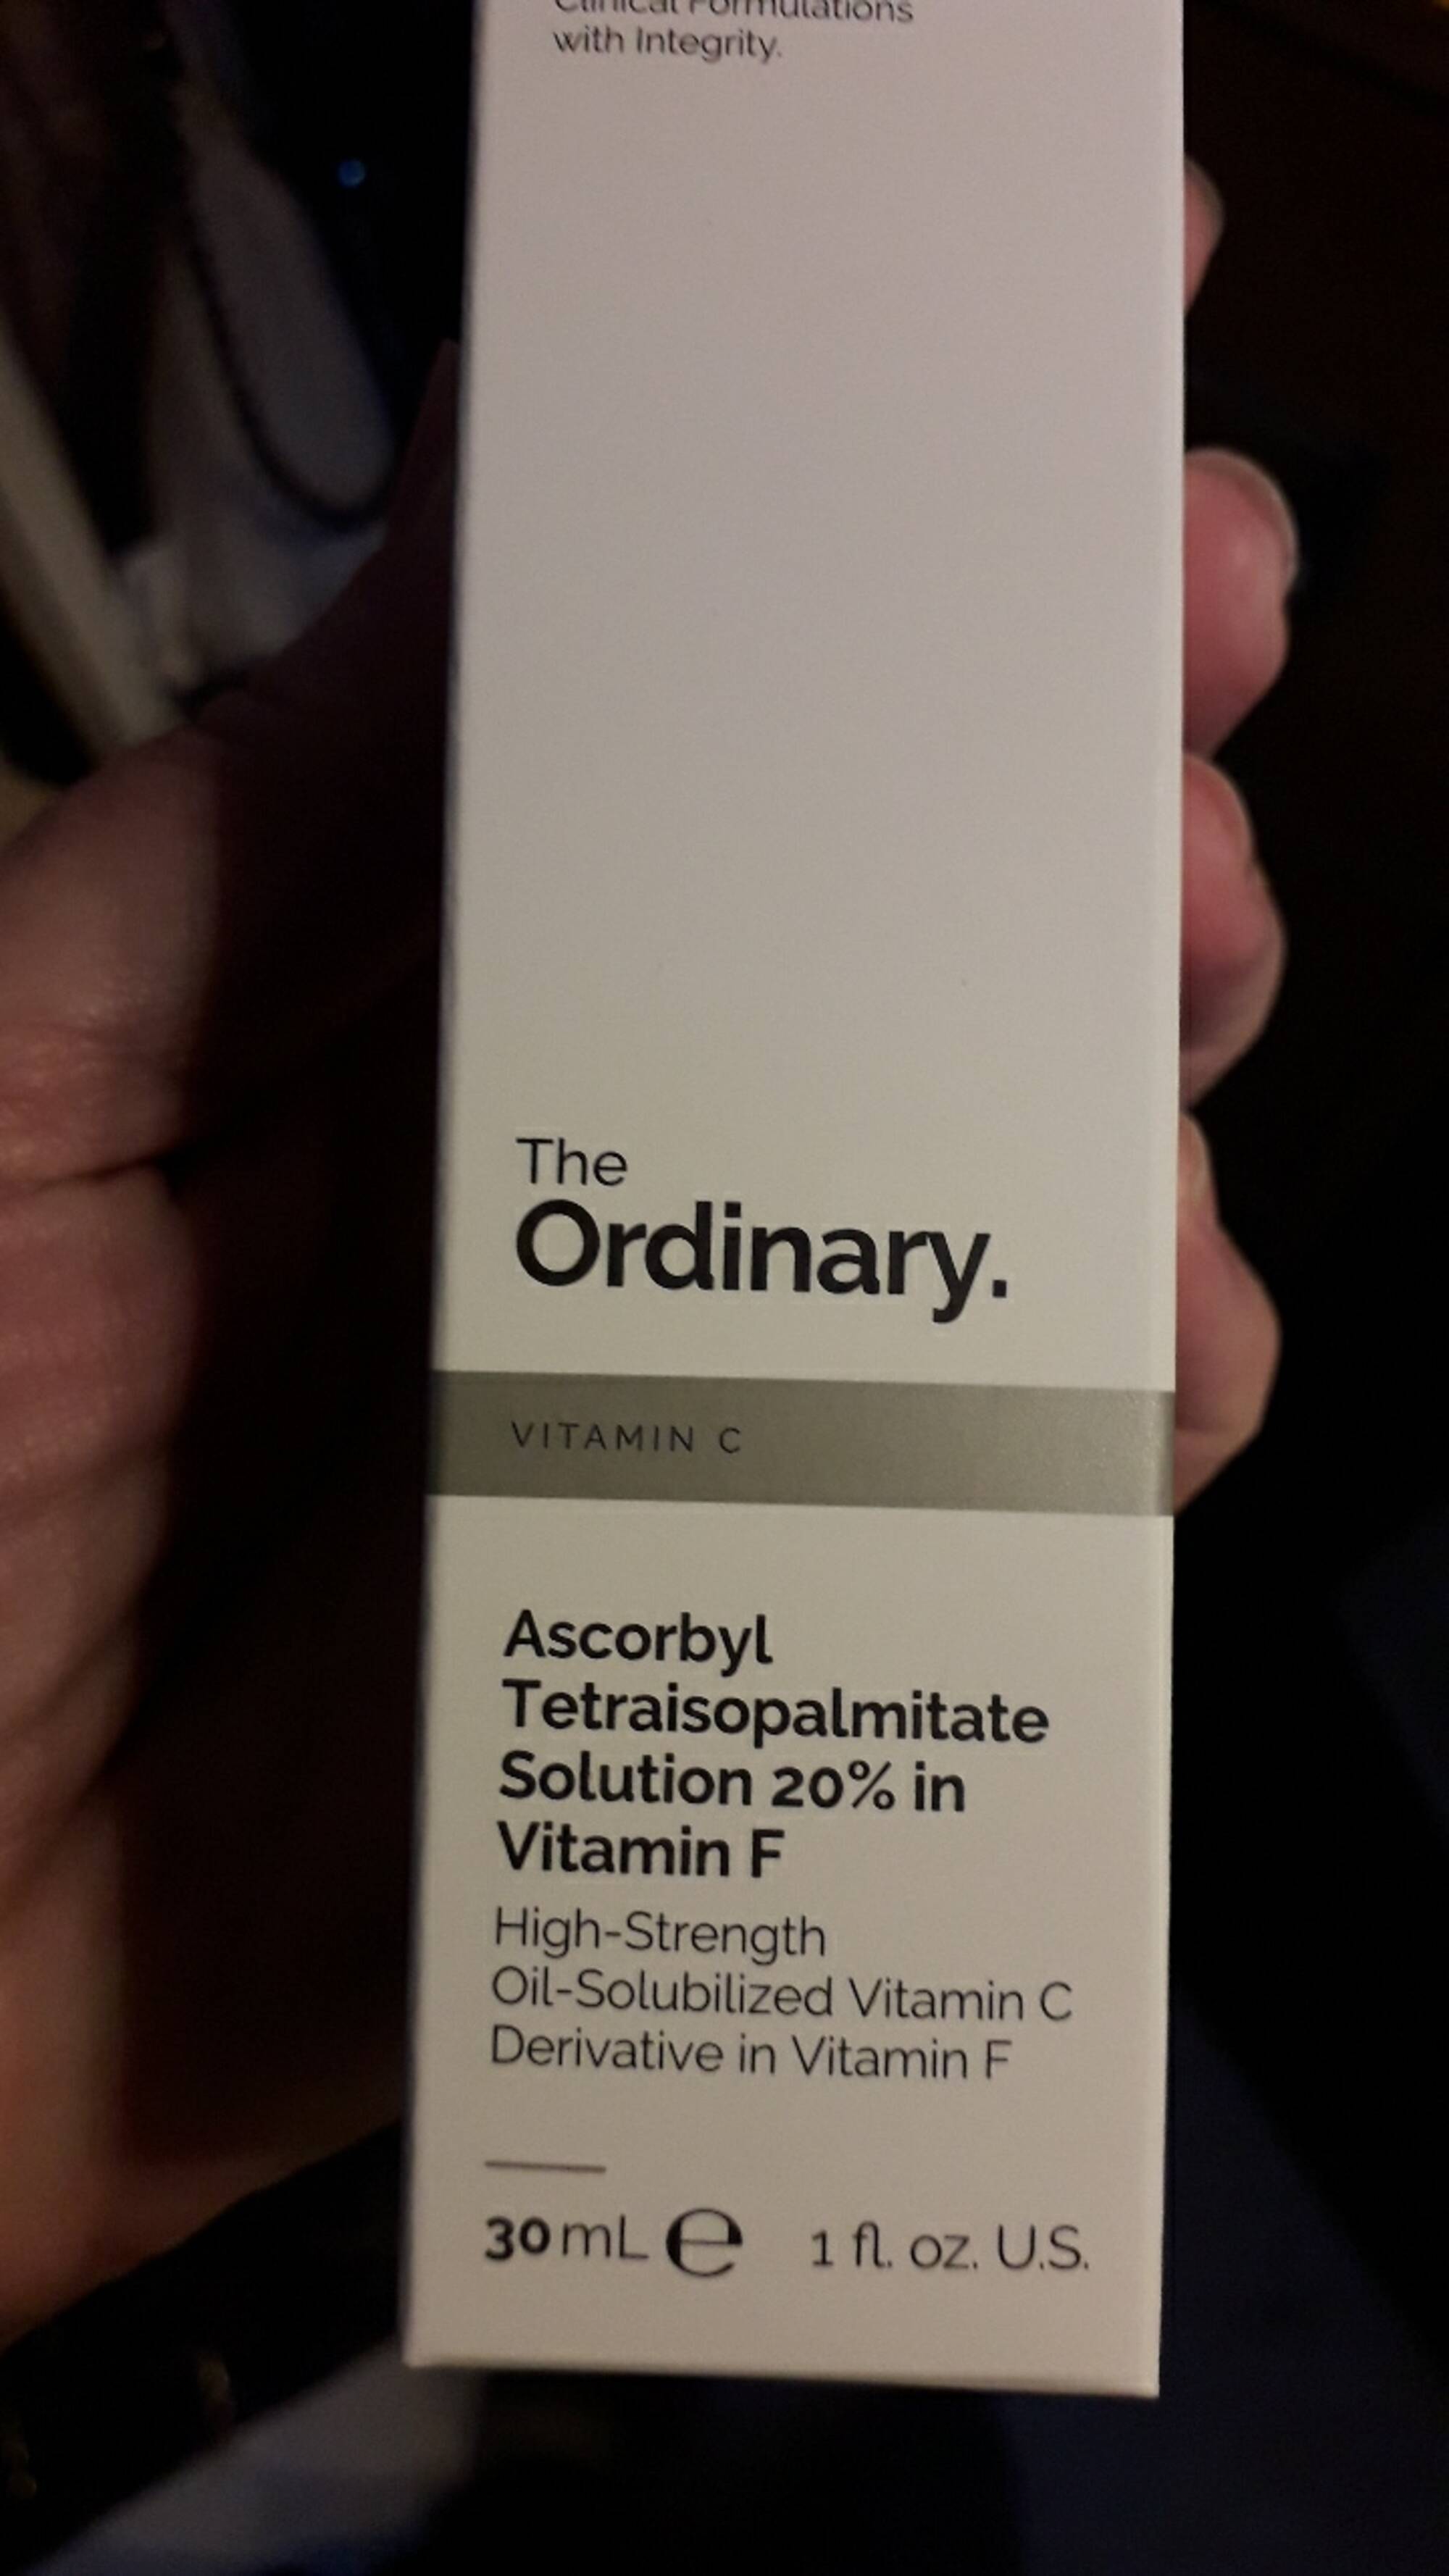 THE ORDINARY - Ascorbyl tetraisopalmitate solution 20% in vitamin F